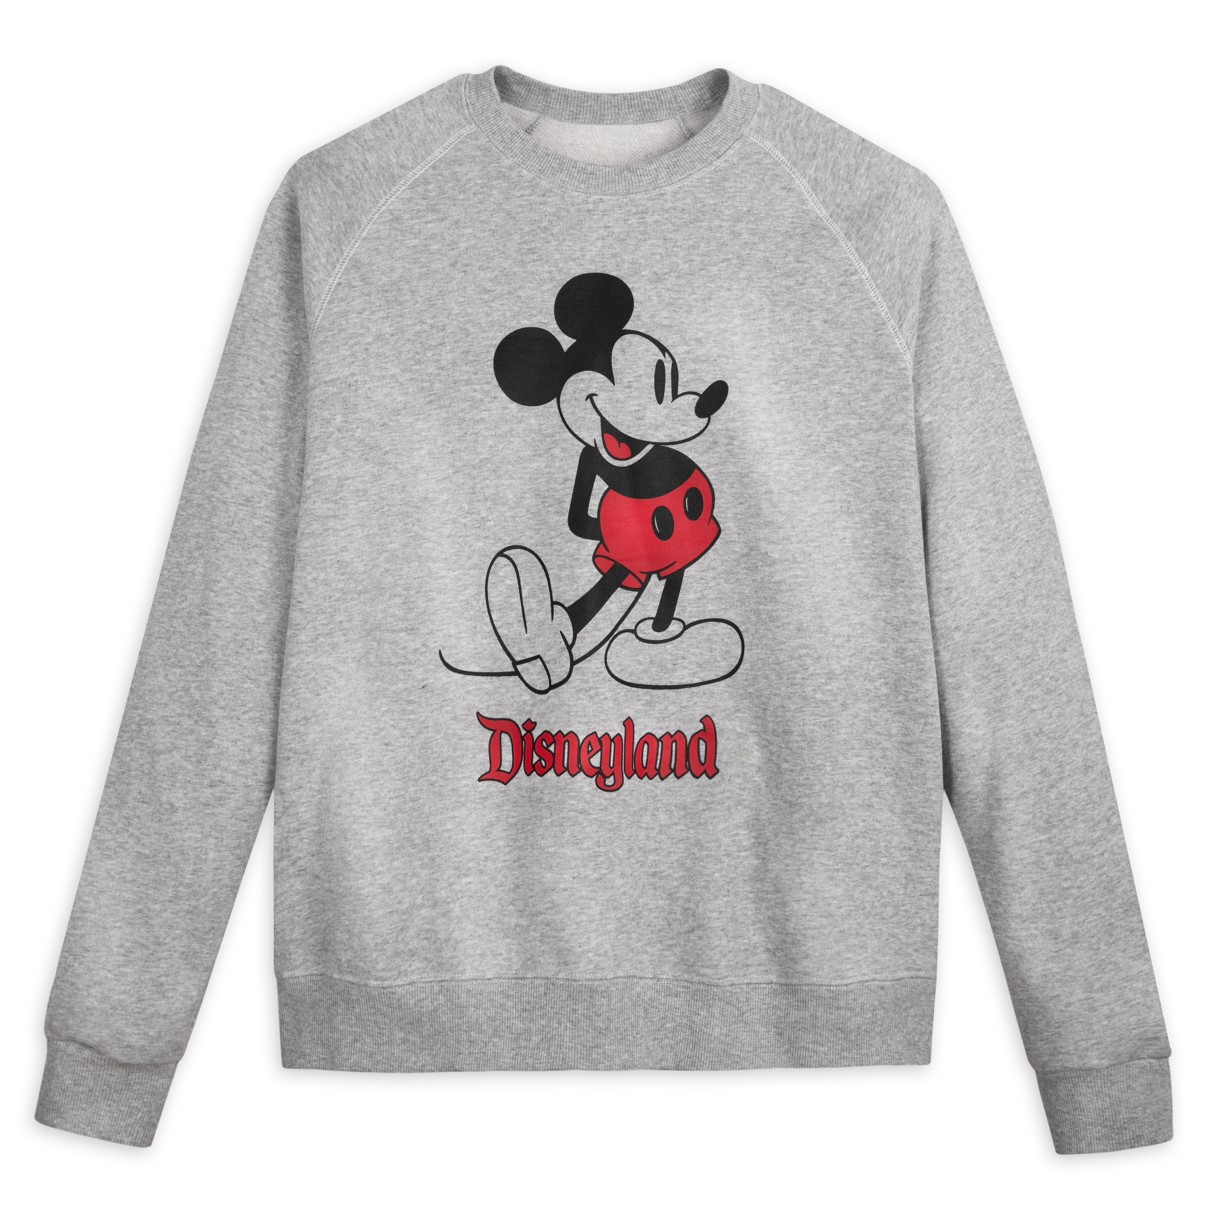 Mickey Mouse Classic Sweatshirt for Adults – Disneyland – Gray